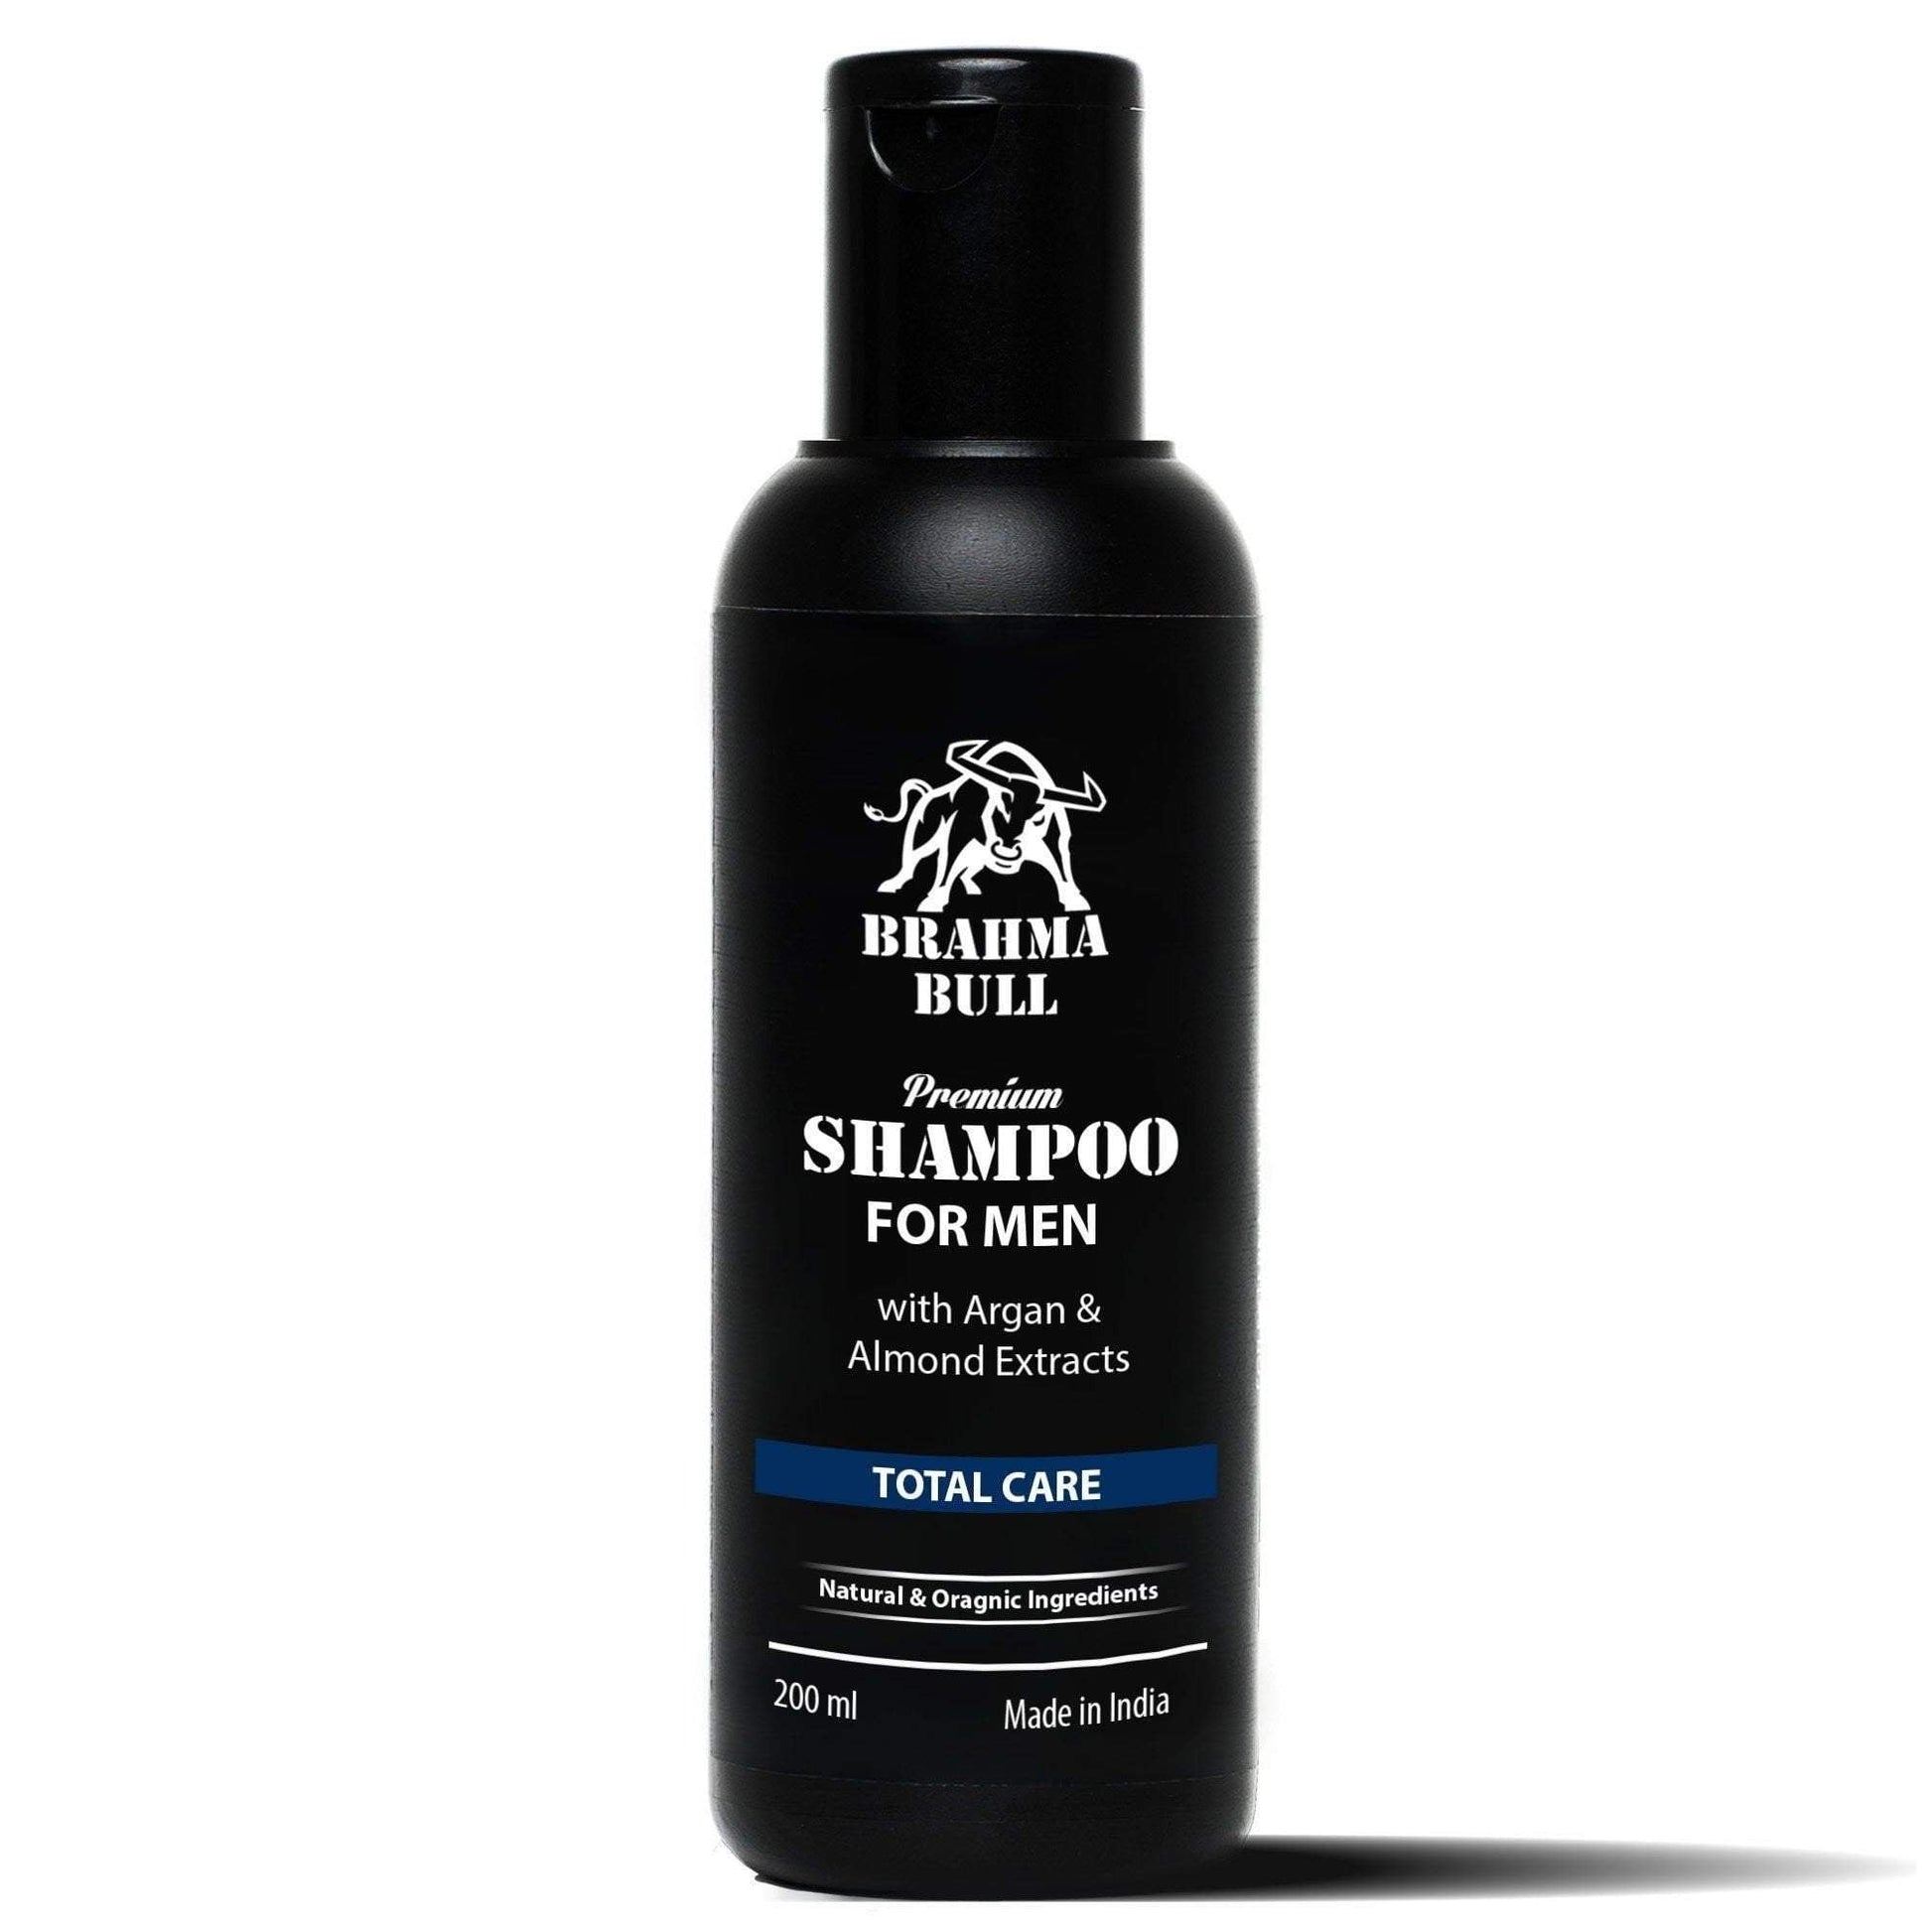 Intimate Wash & Shampoo - Brahma Bull - Men's Grooming